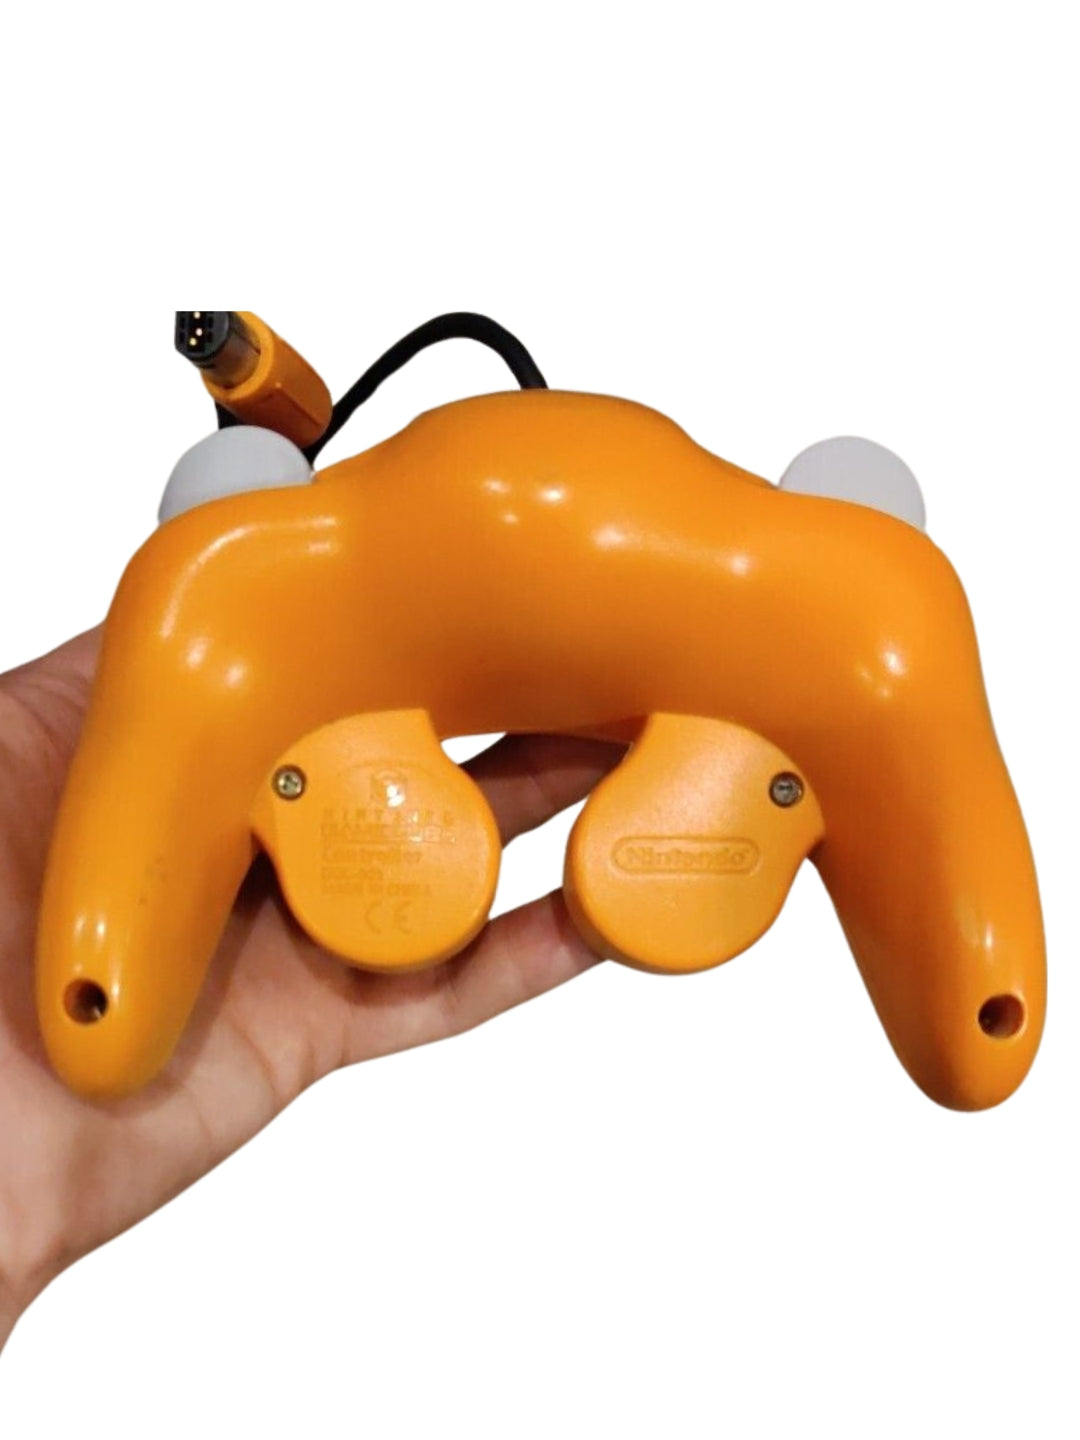 Official orange Nintendo GAMECUBE controller from Nintendo.